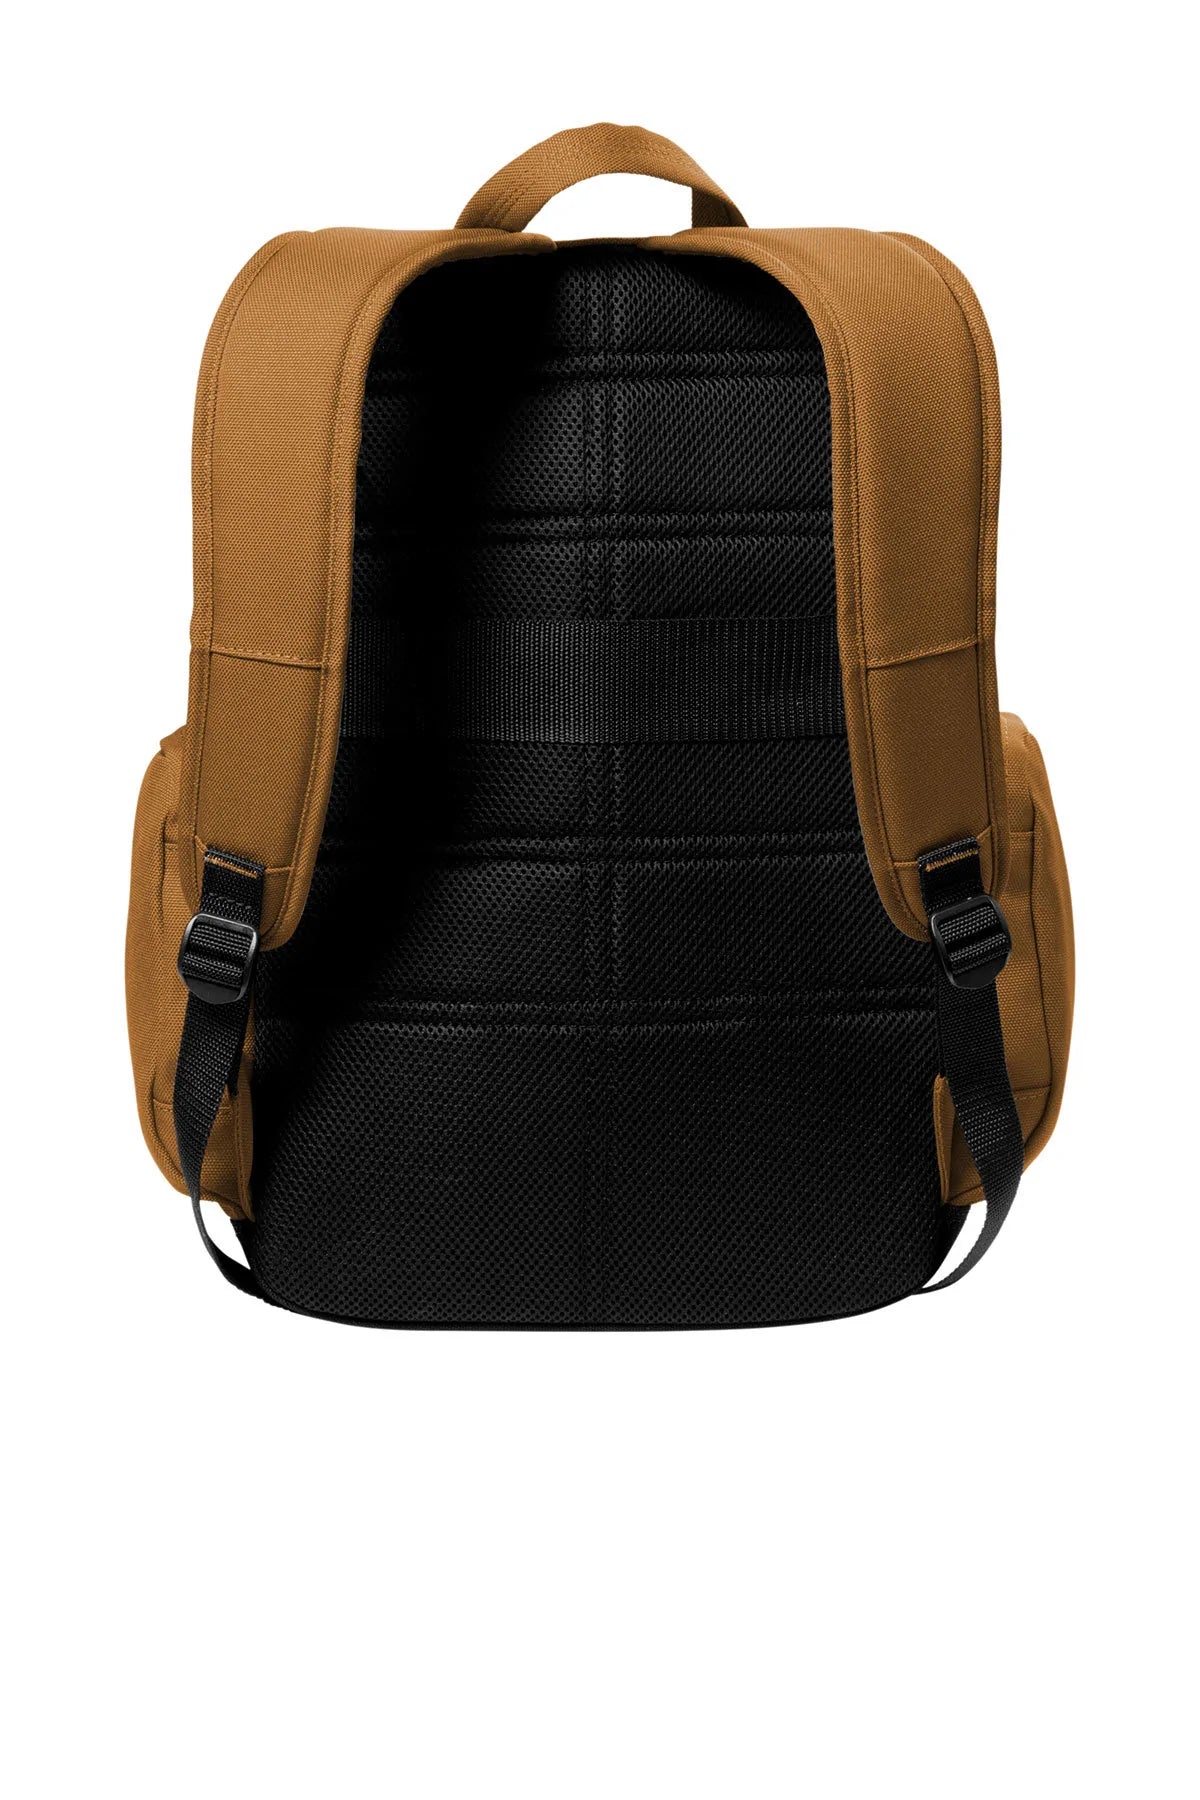 Carhartt Foundry Series Pro Custom Backpacks, Carhartt Brown